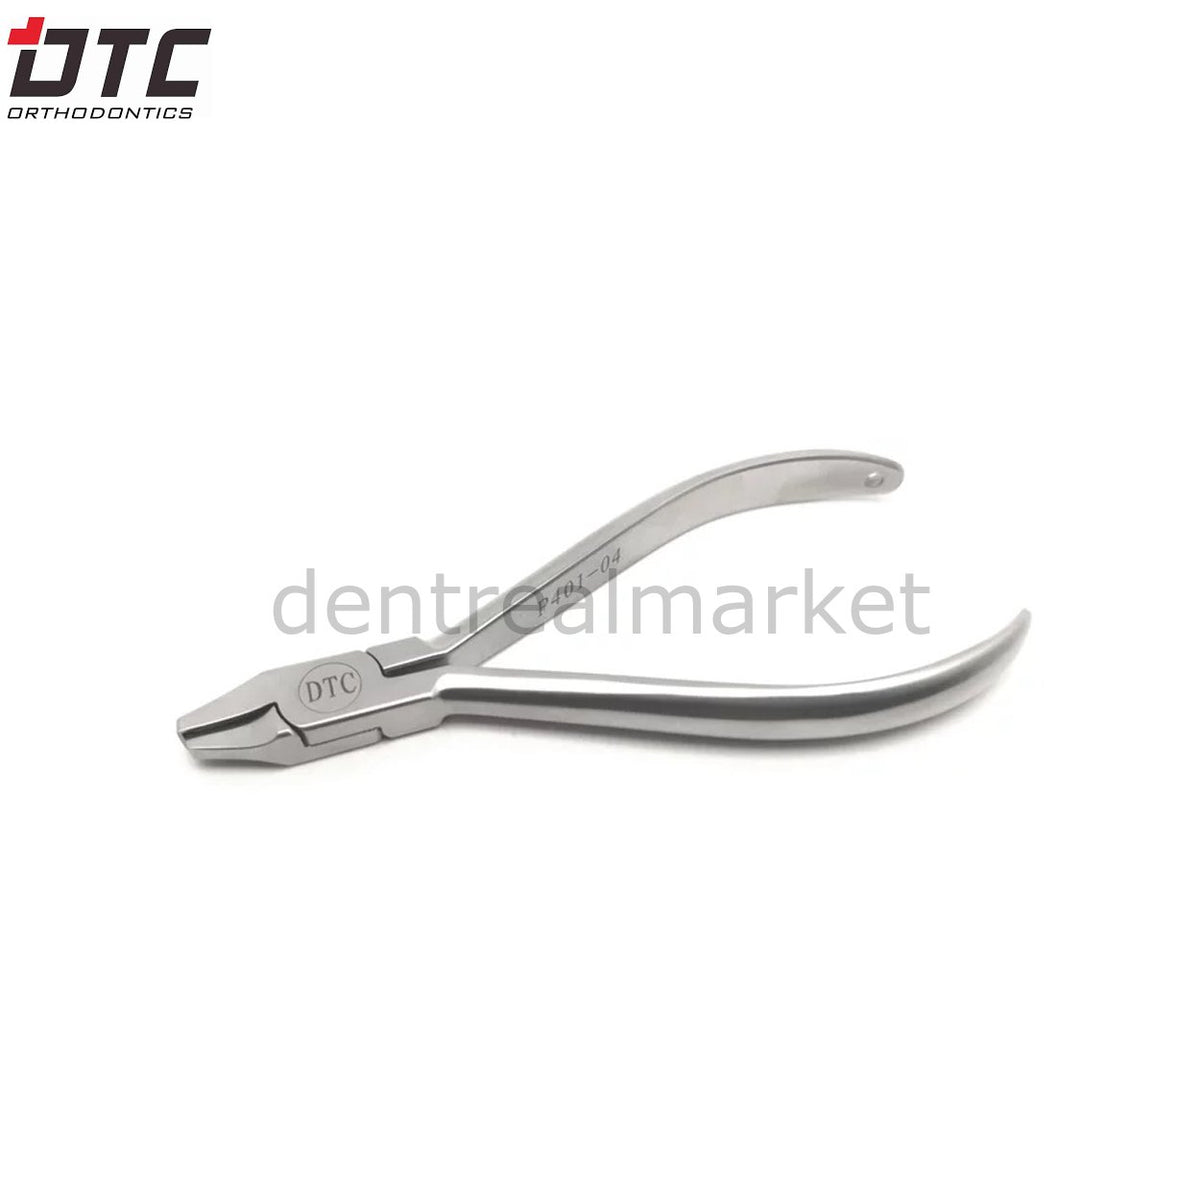 DentrealStore - Dtc Orthodontics Clear Aligner Plier - Horizontal Pliers